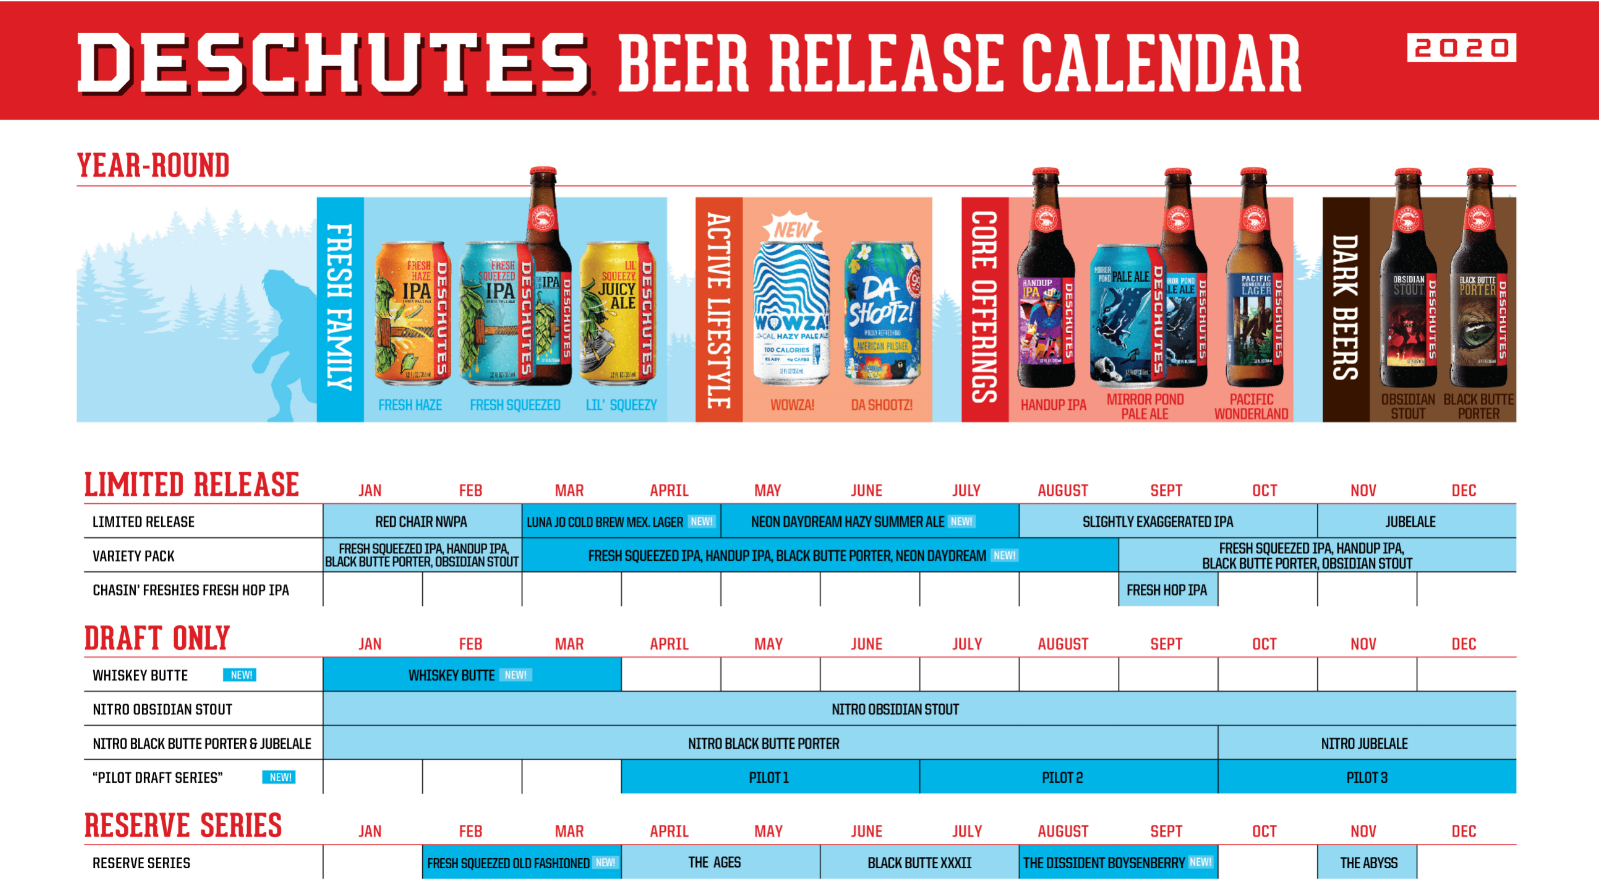 Deschutes Brewery 2020 Beer Release Calendar